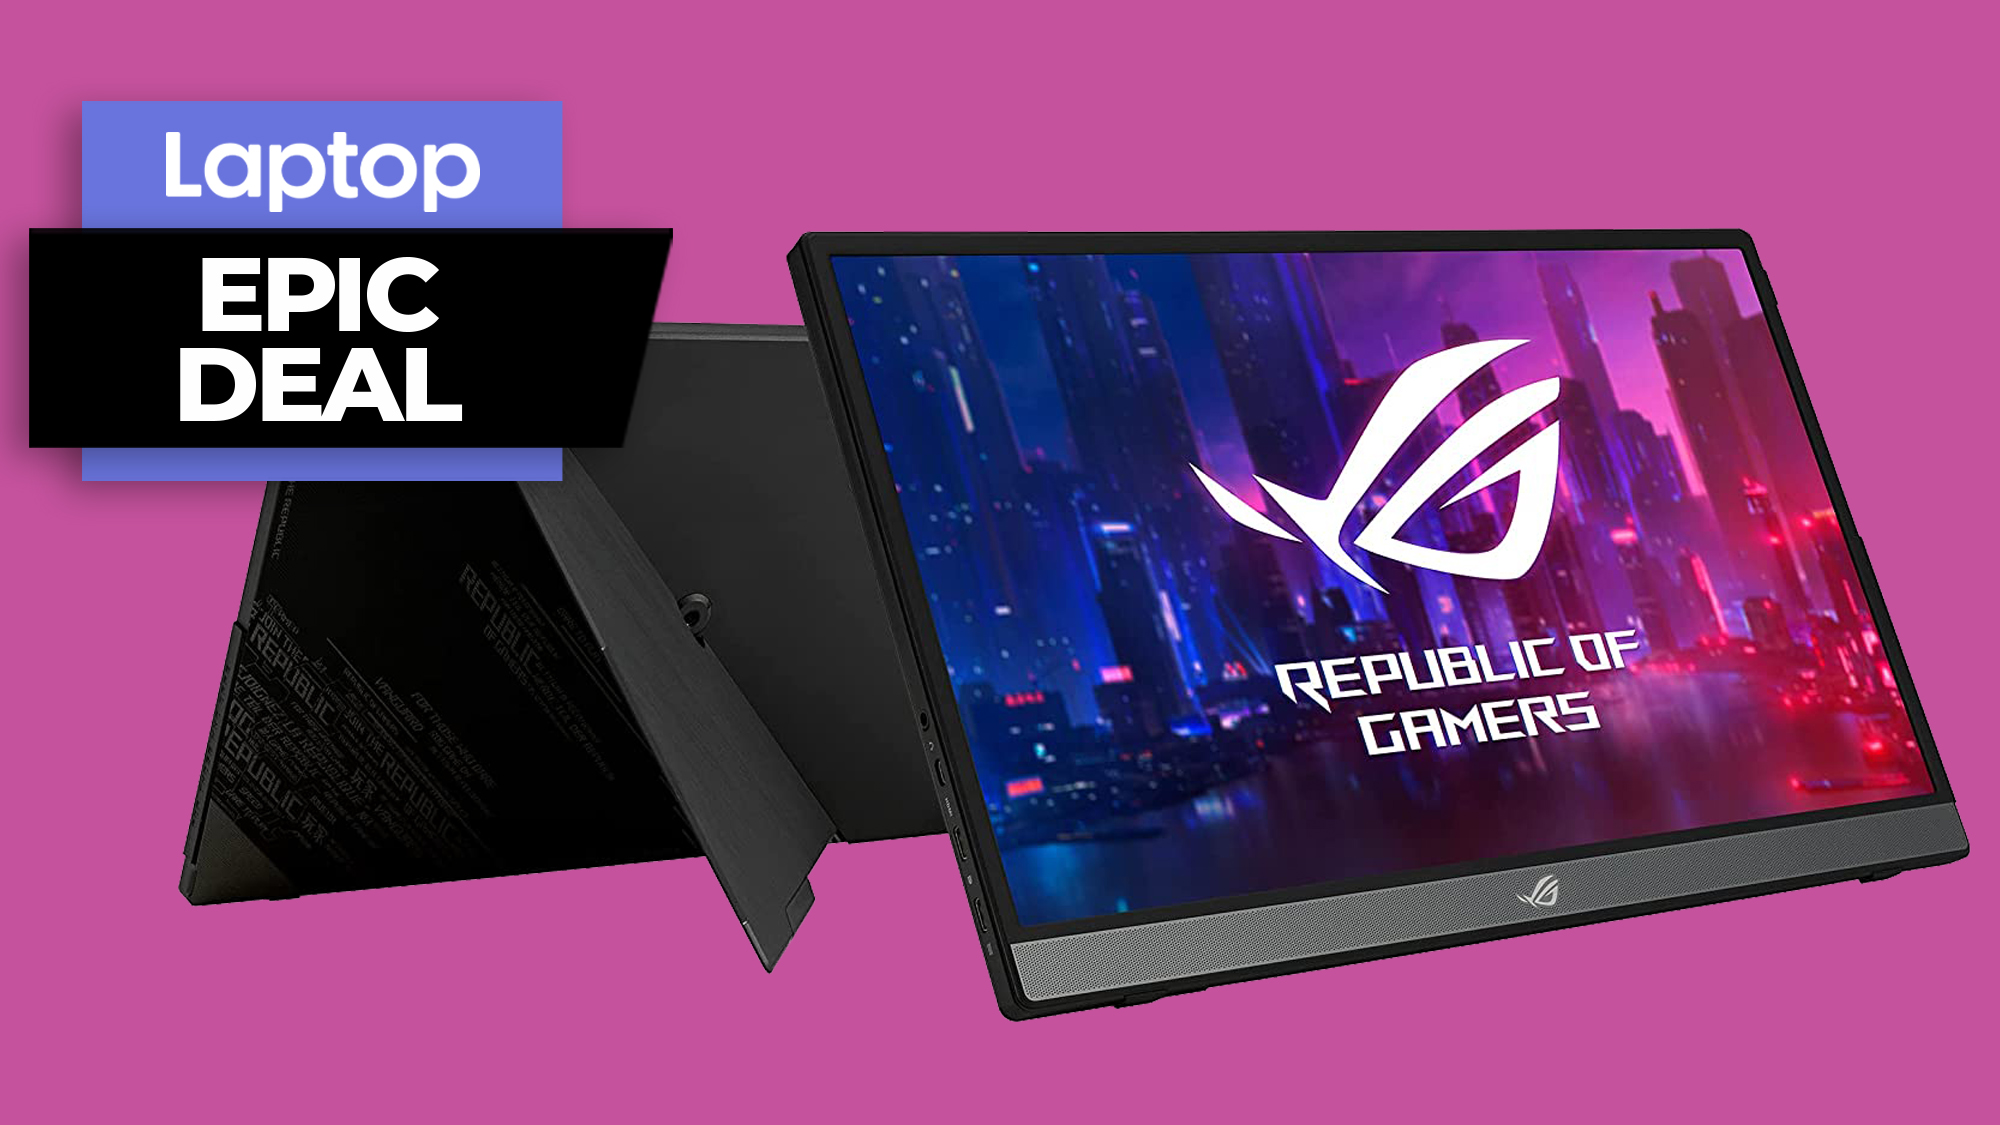 Asus ROG Strix 15.6-inch, 1080p portable gaming monitor deal